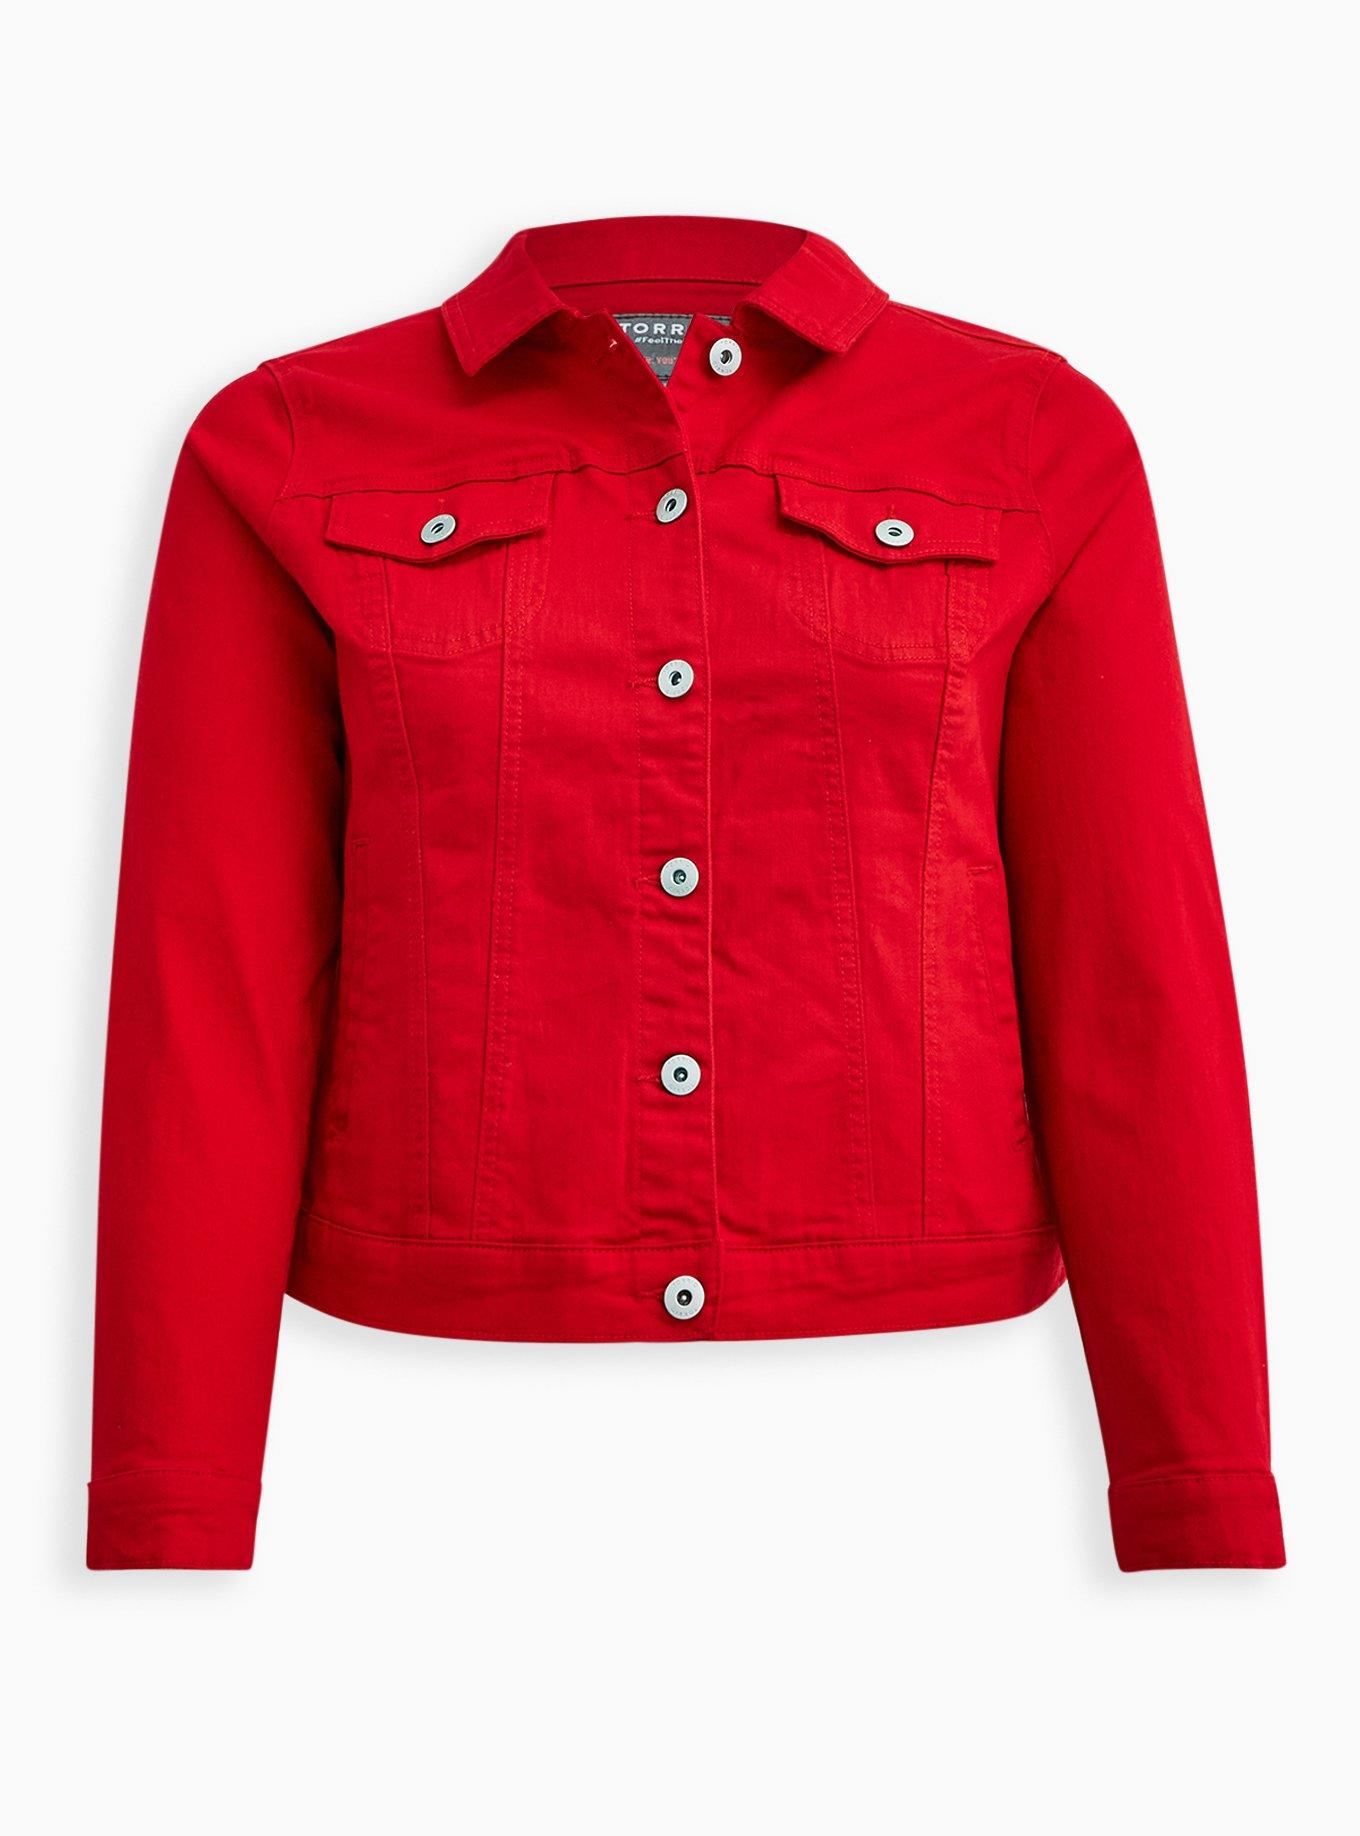 Plus Size - Ruby Red Denim Trucker Jacket - Torrid